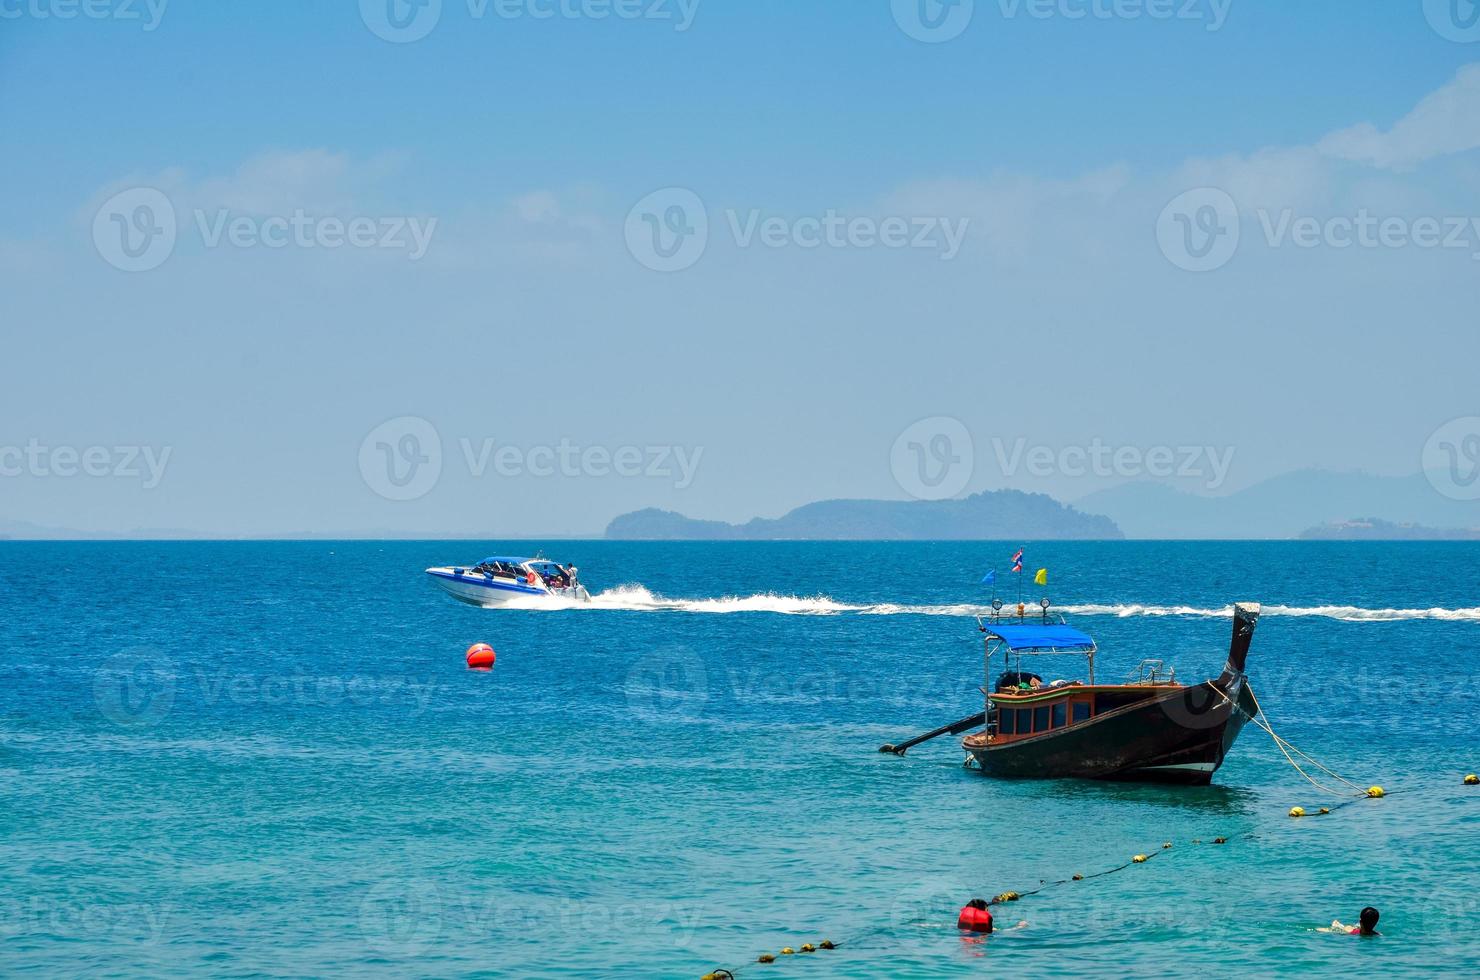 navio de cruzeiro praia tropical phuket tailândia mar andaman foto